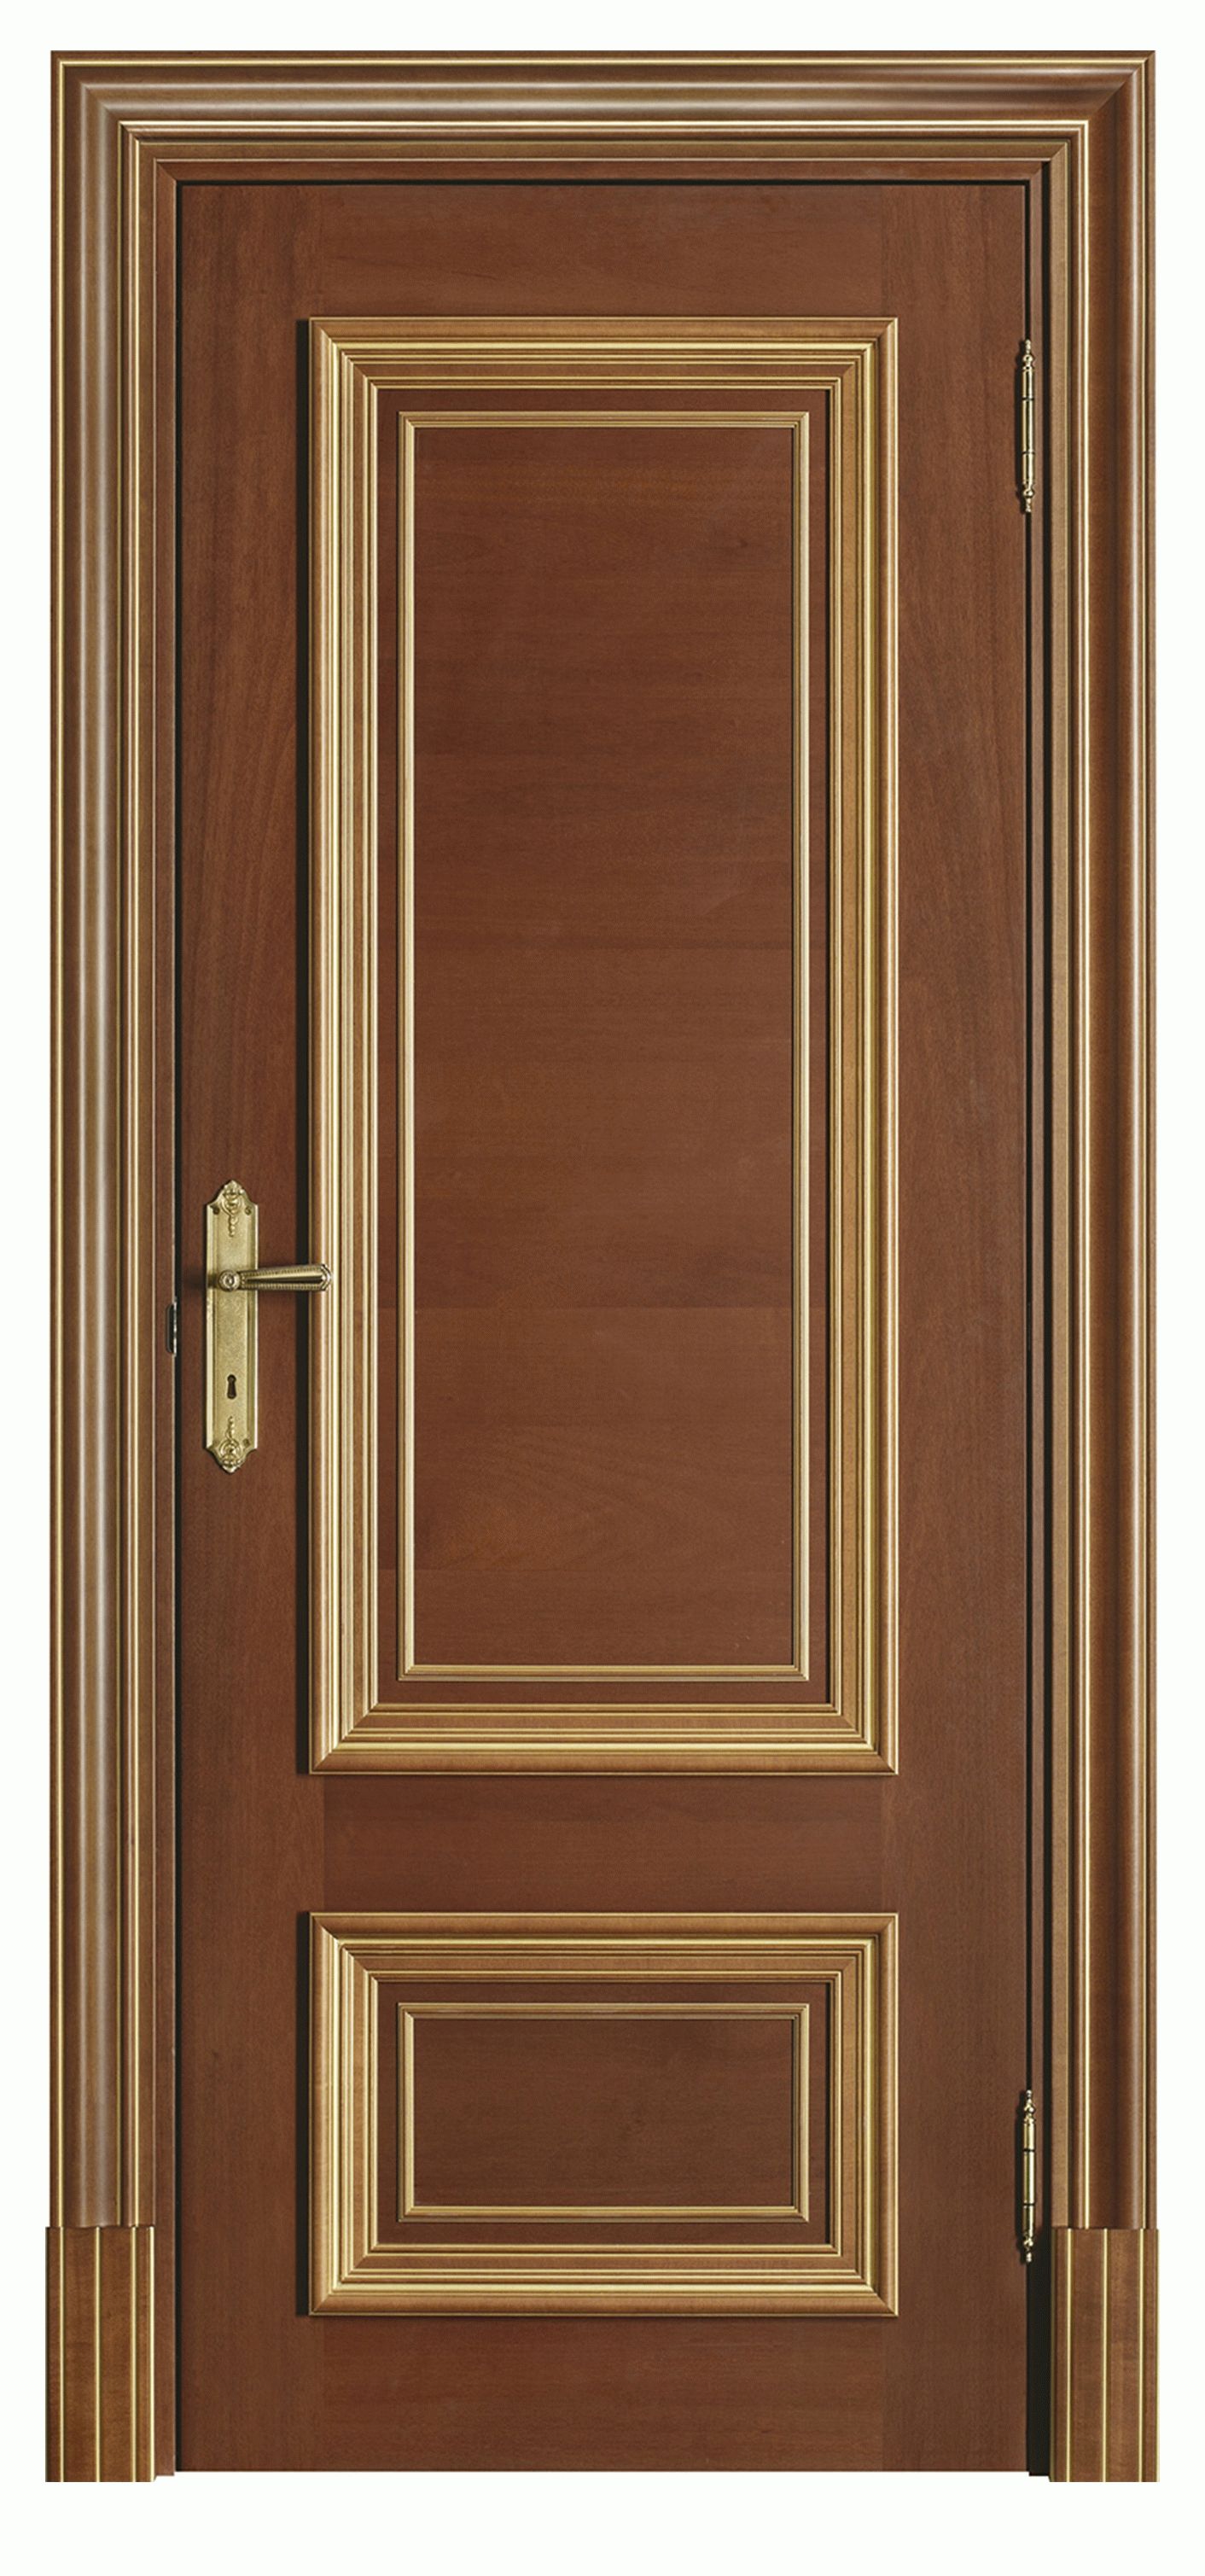  Potenza classico 110 PW Interior Door image from VULDI COMPANY